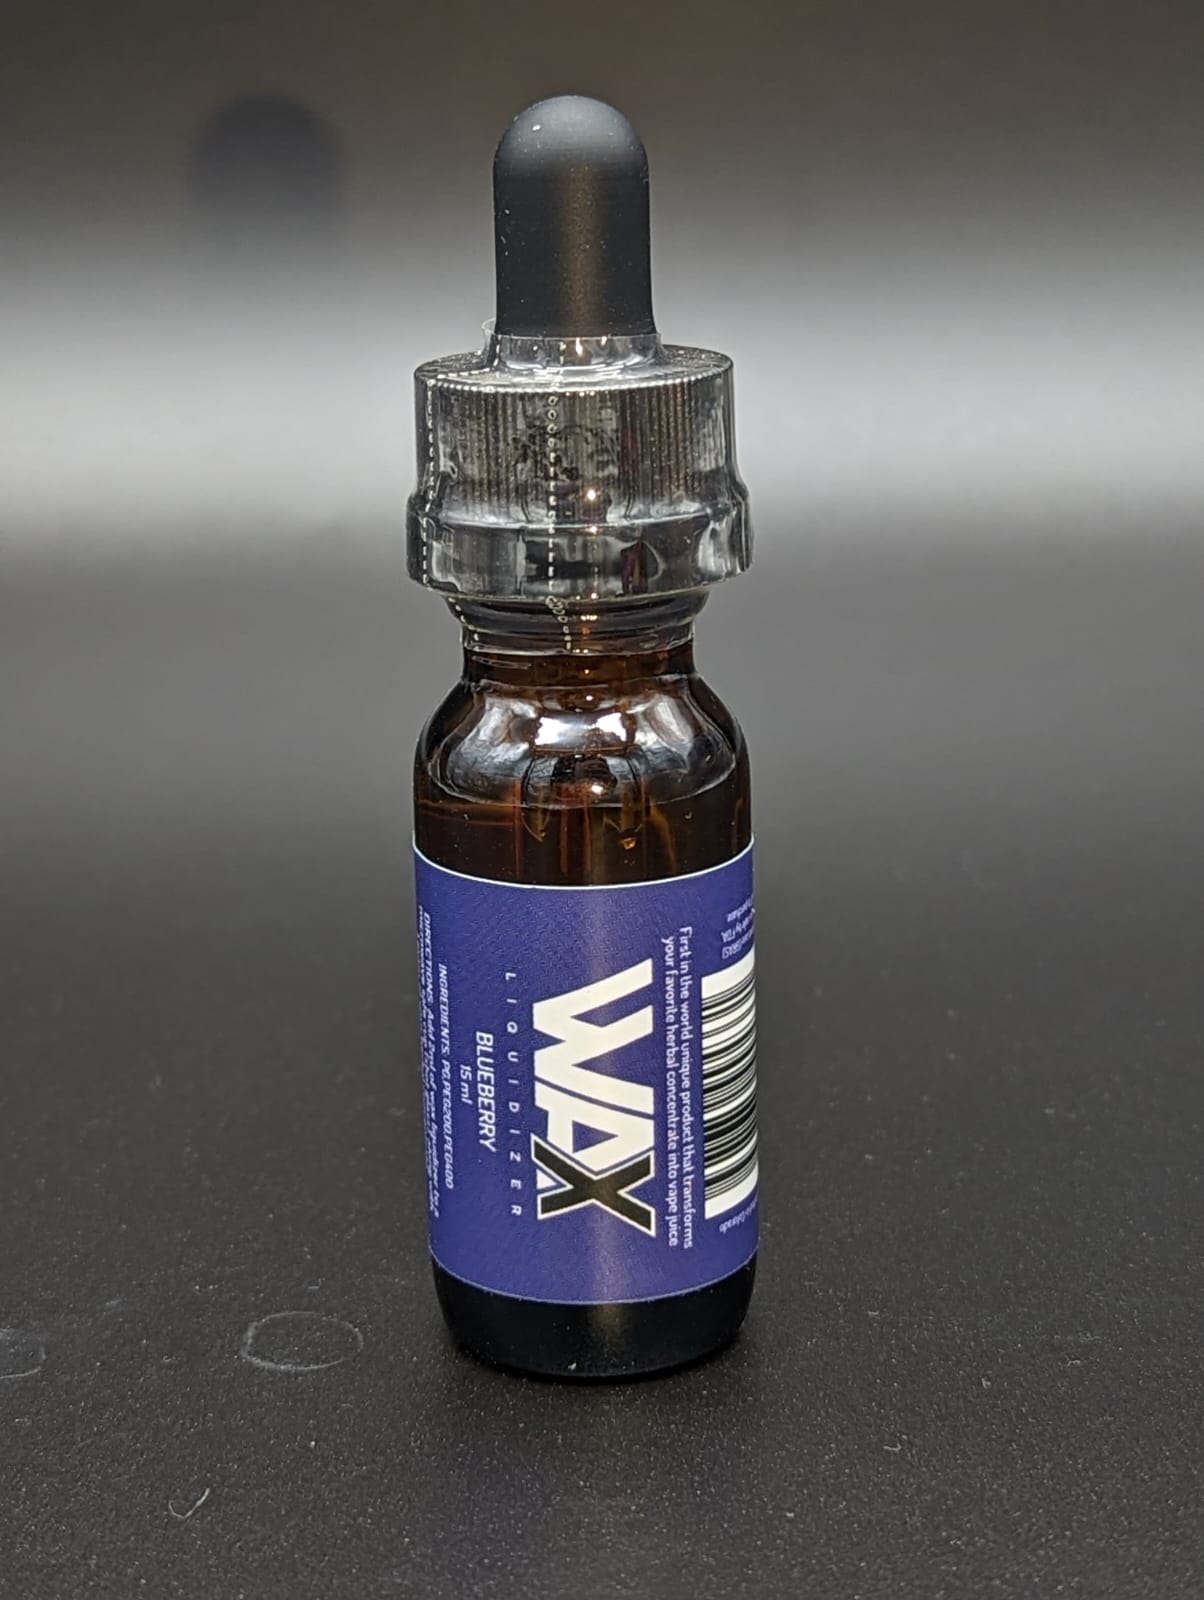 Wax Liquidizer Original - 15ml Glass Bottle Premium